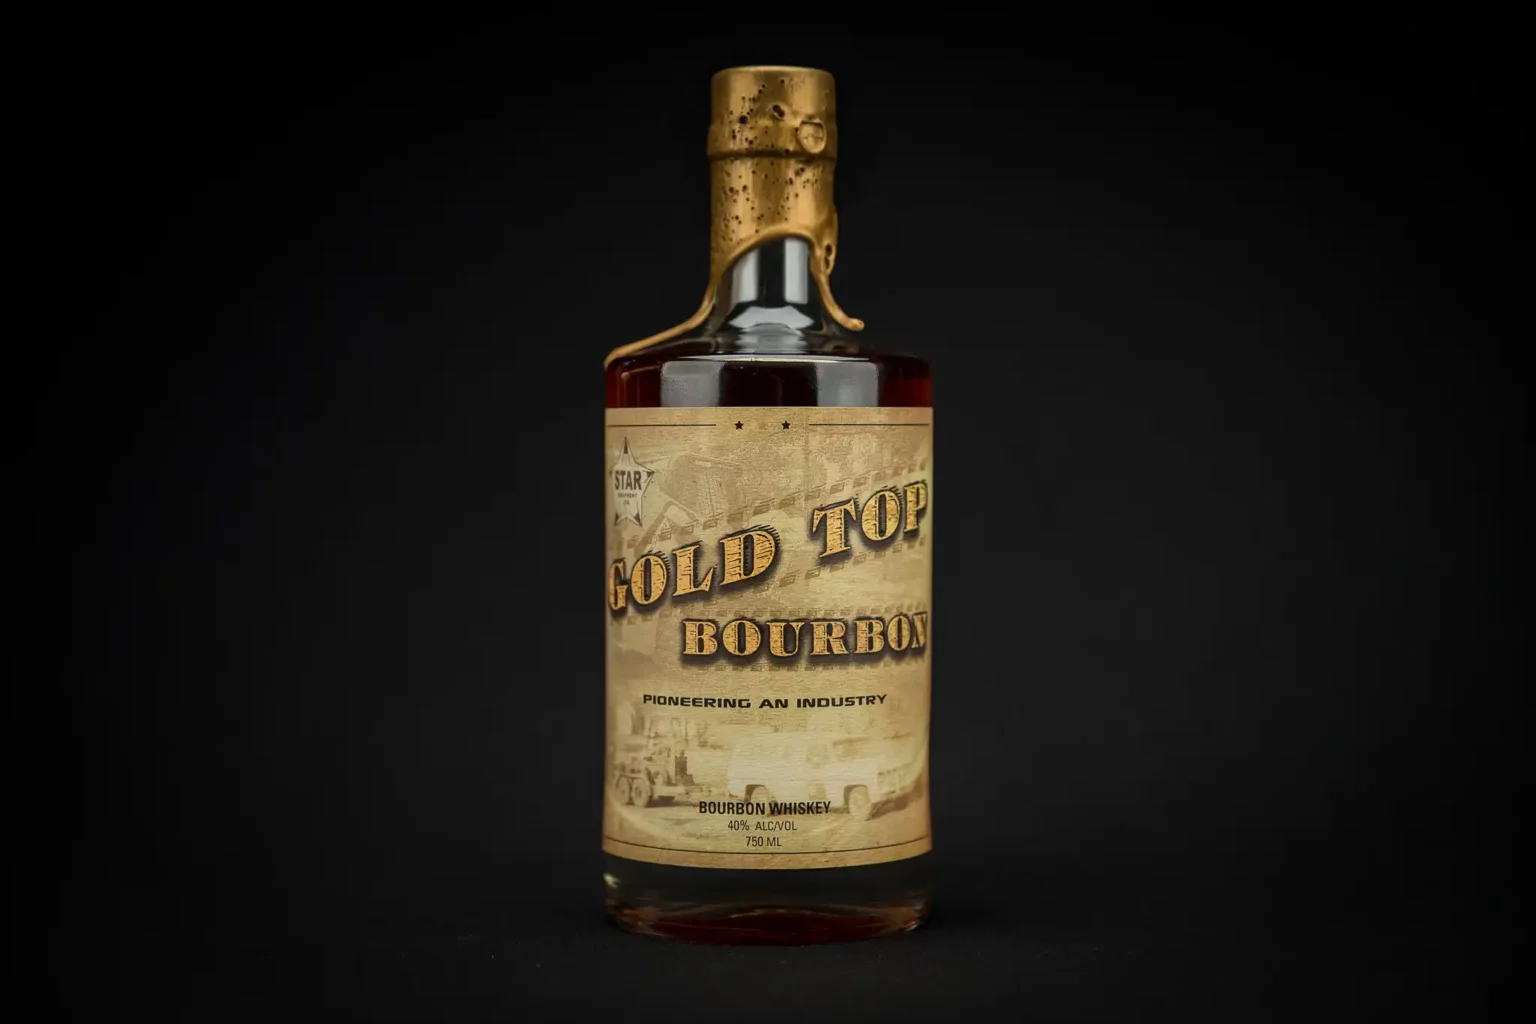 featured-spirit-gold-top-bourbon-whiskey